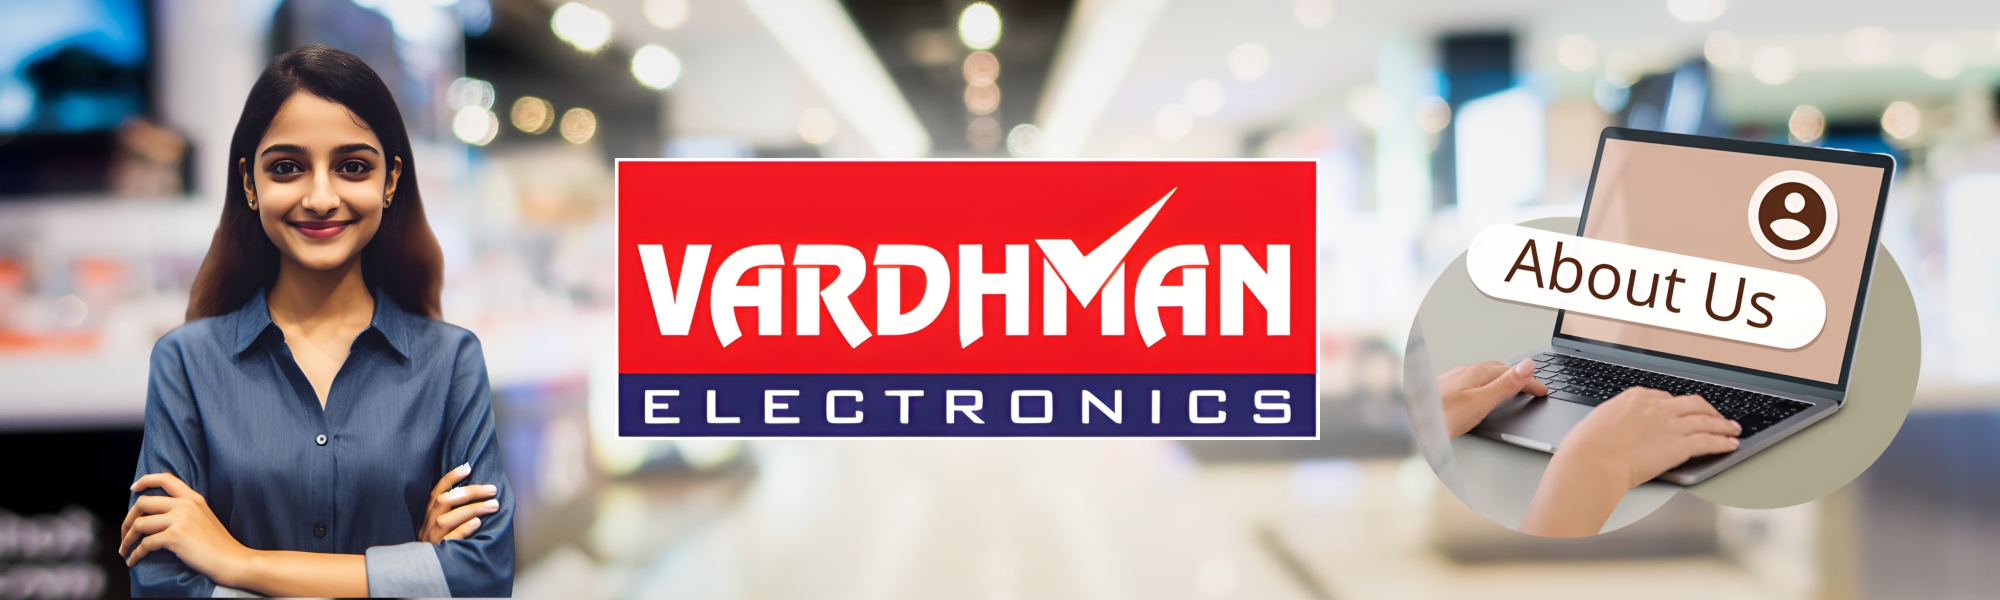 About Us Vardhman Electronics